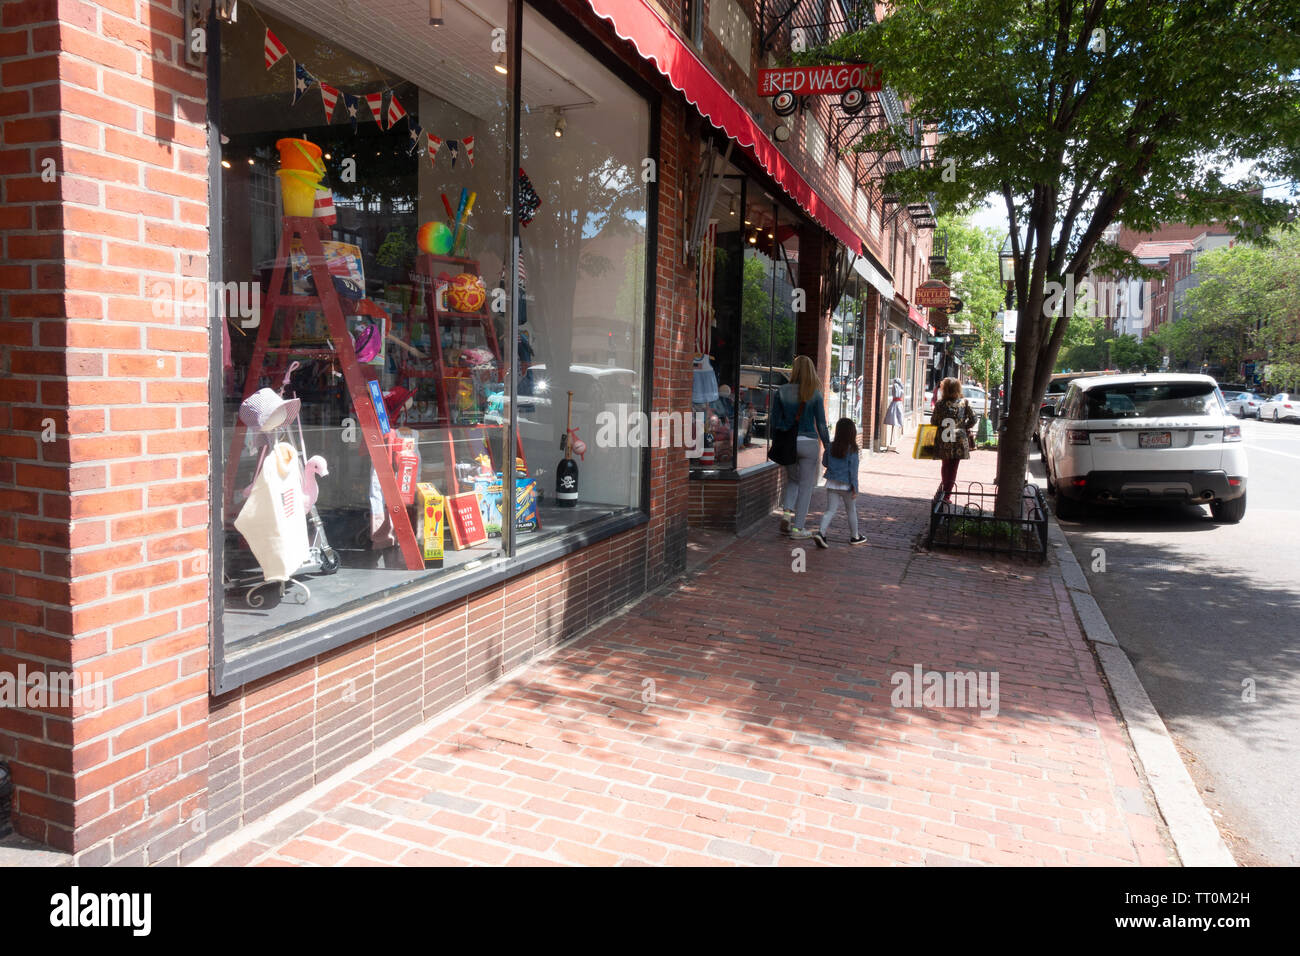 Brick storefronts and sidewalks on Charles Street in Beacon Hill, Boston Massachusetts Stock Photo